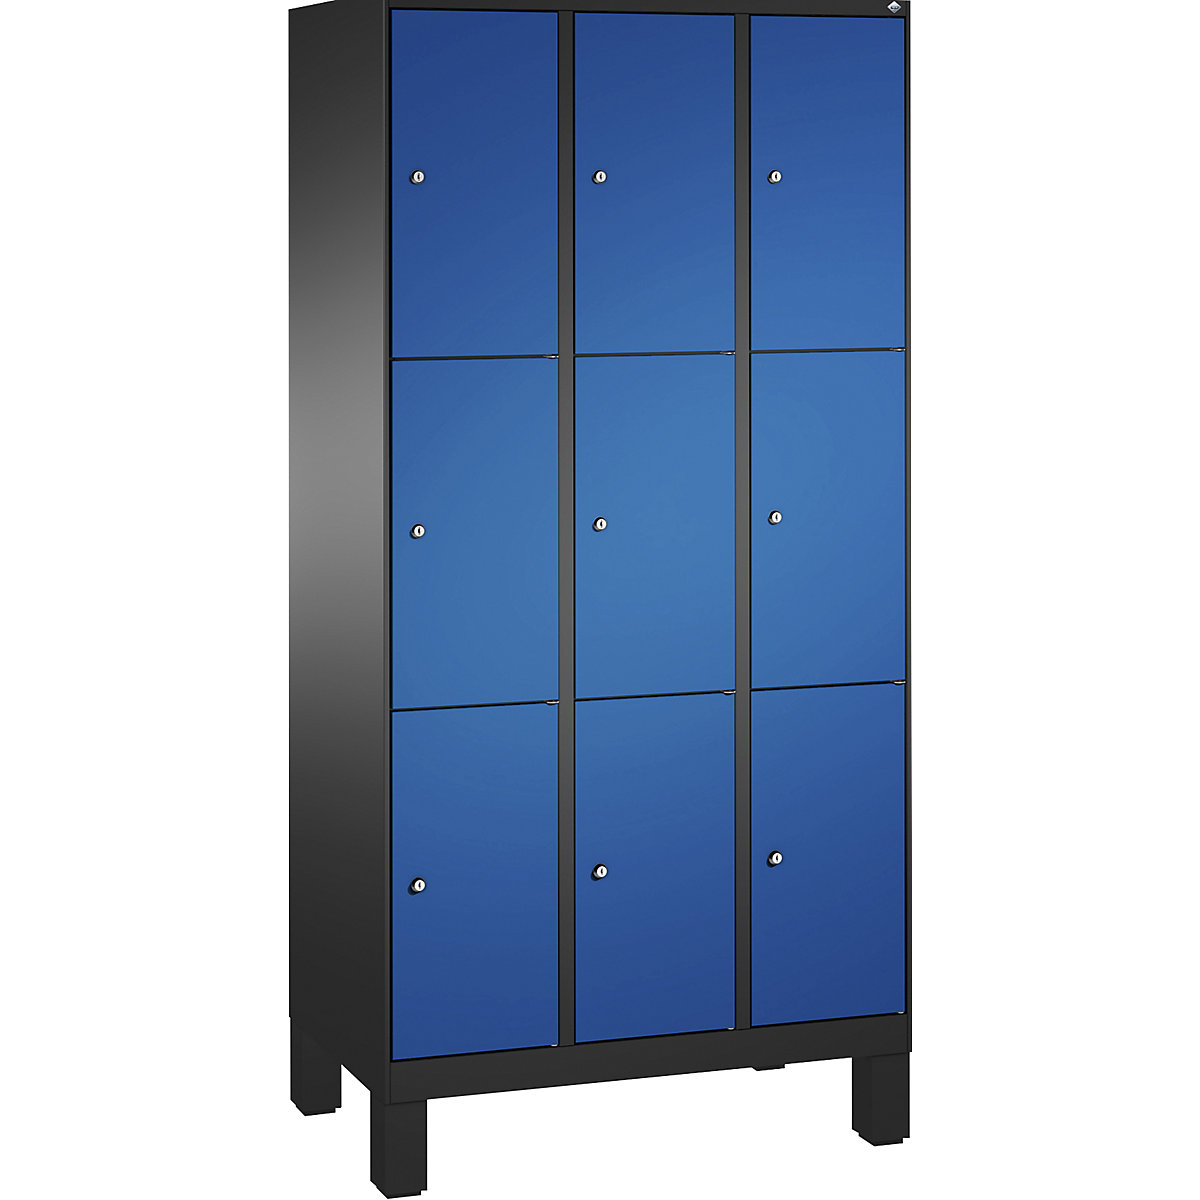 EVOLO locker unit, with feet – C+P, 3 compartments, 3 shelf compartments each, compartment width 300 mm, black grey / gentian blue-13